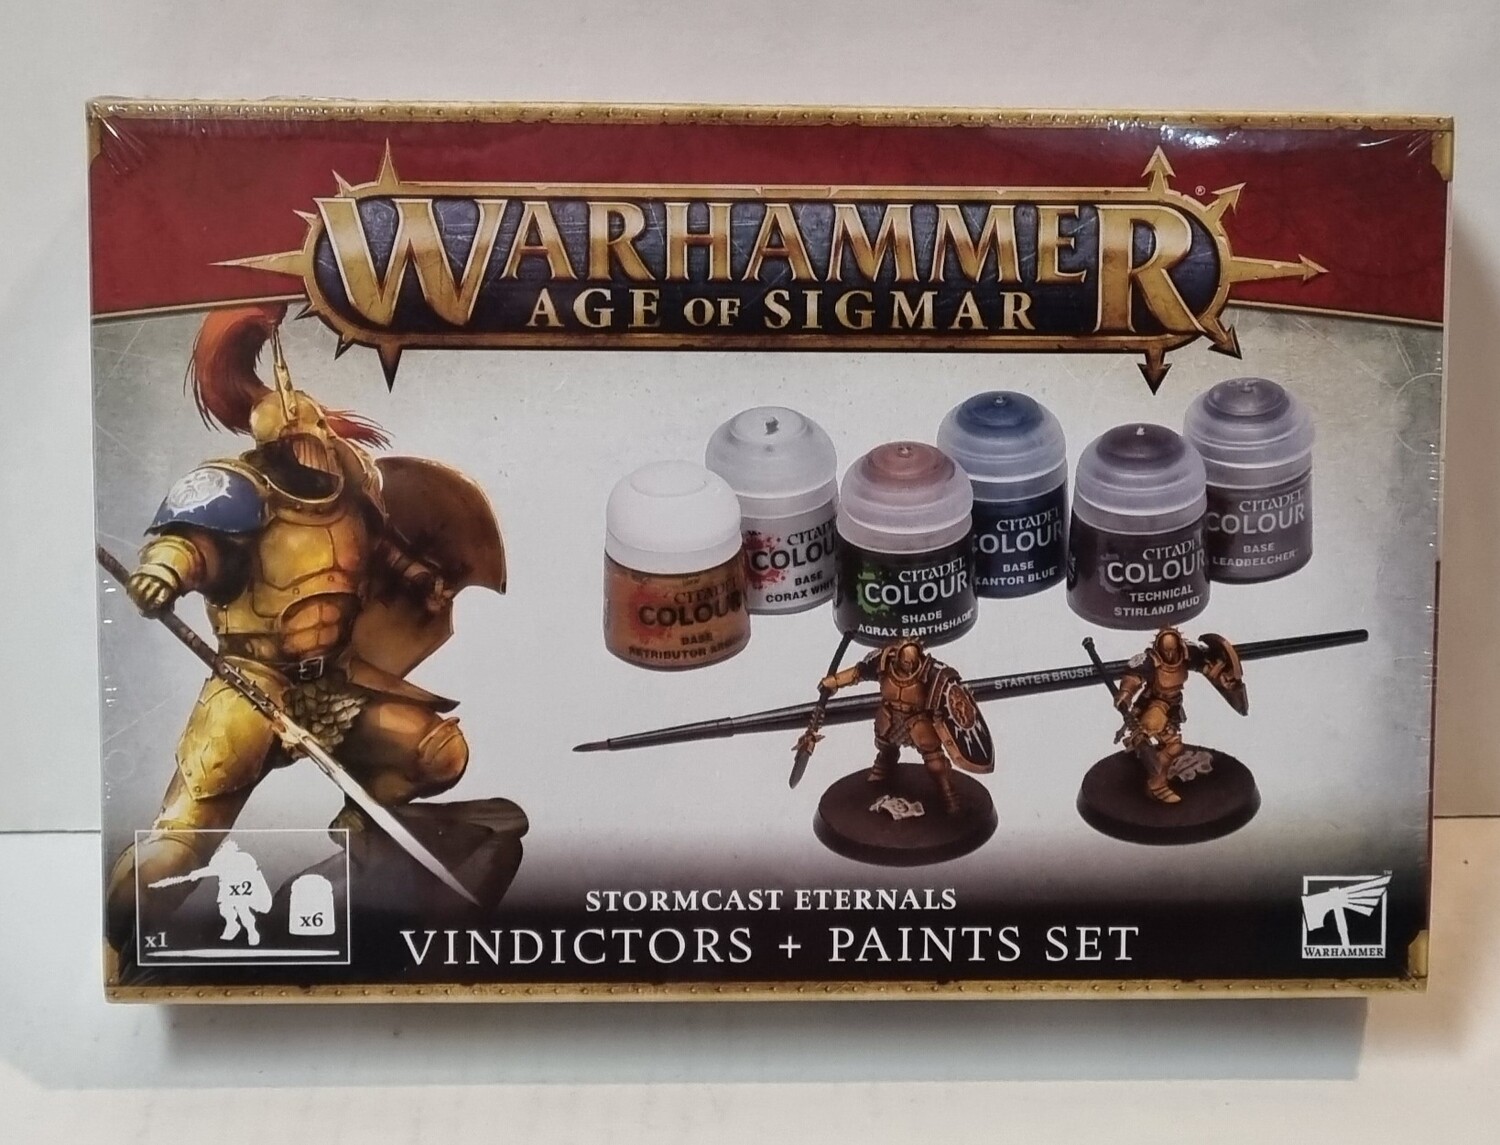 Warhamner, Age of Sigmar, 60-10, Stormcast Eternals: Vindictors + Paint set